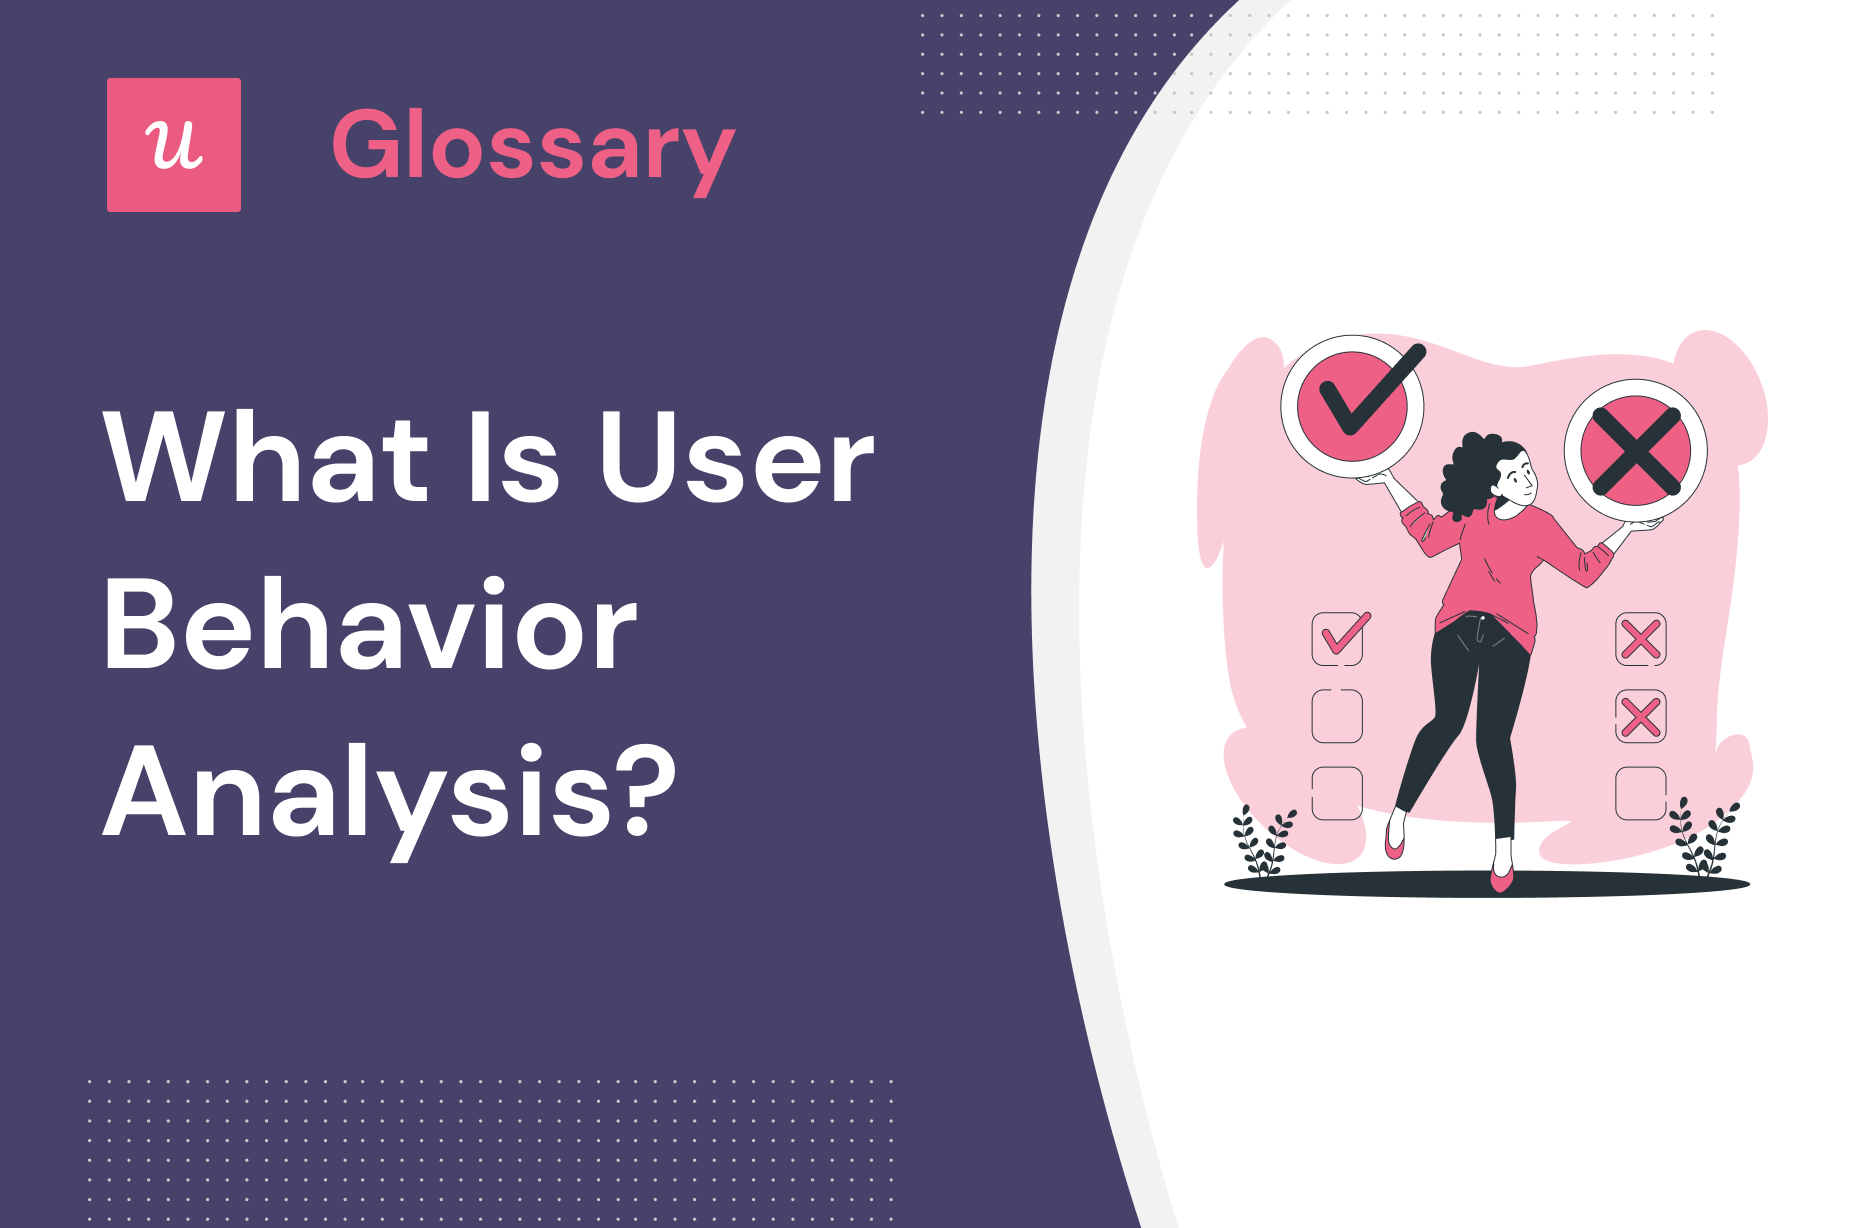 What is User Behavior Analysis?